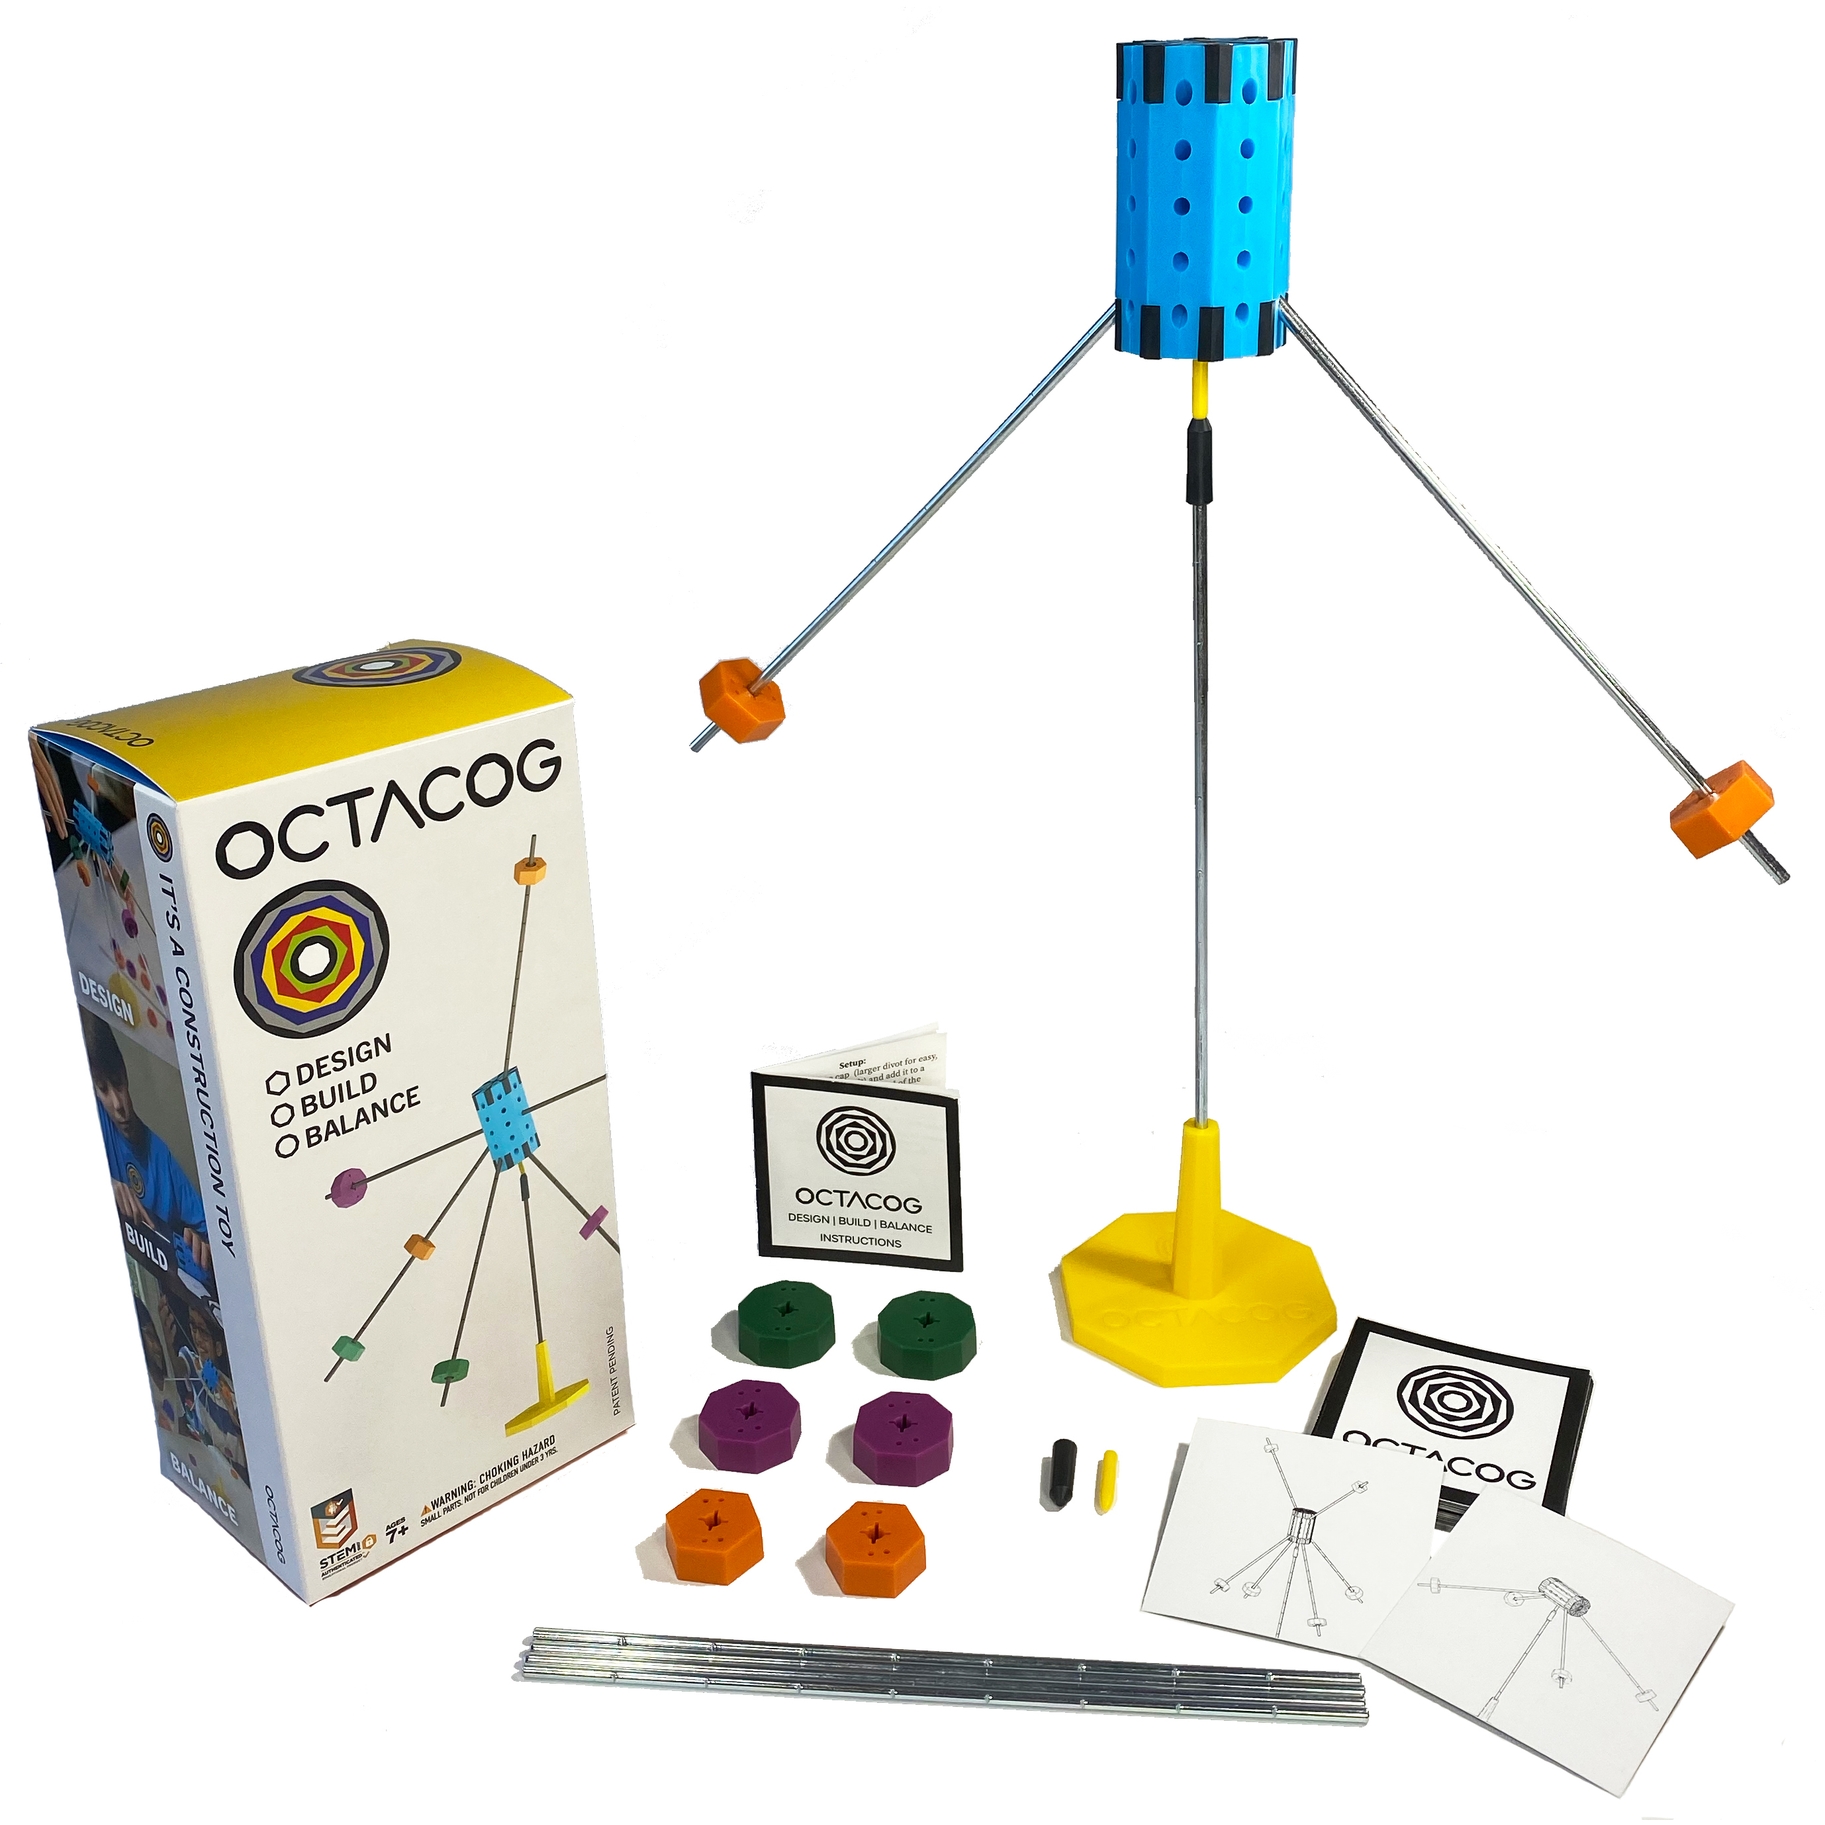 Octacog STEM tool physics and balance game